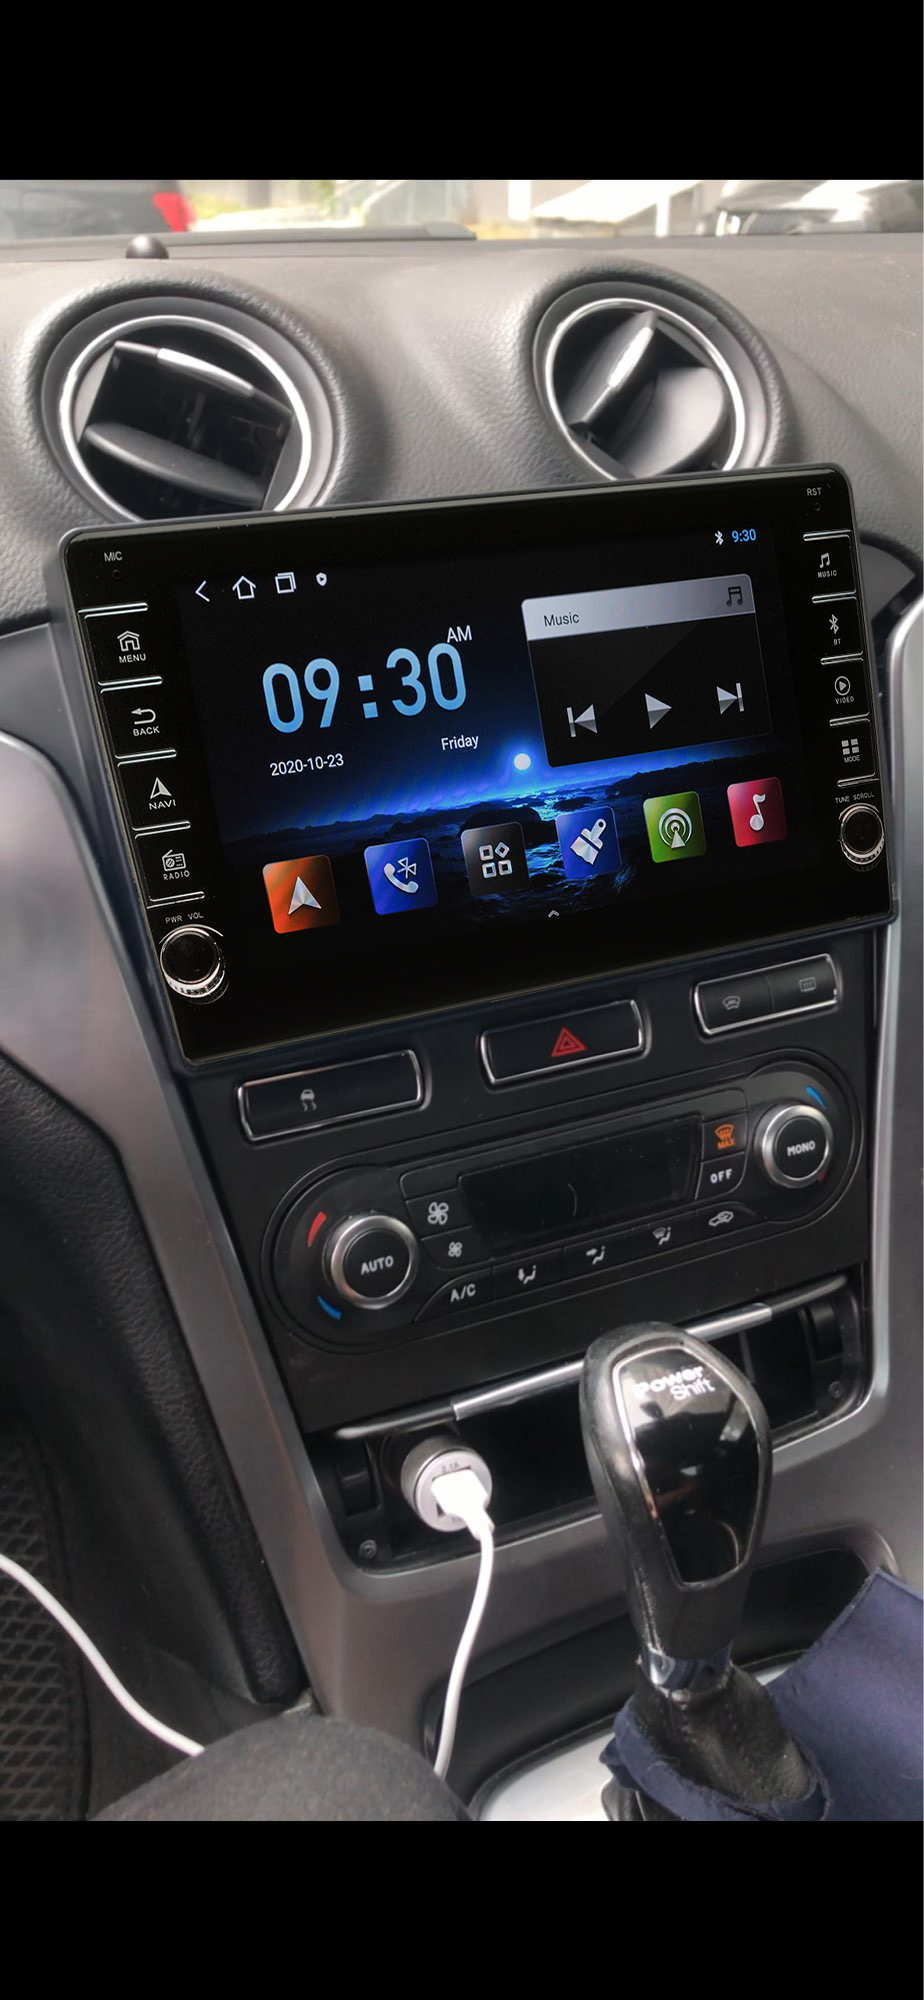 Navigatie AUTONAV Android GPS Dedicata Ford Mondeo 2010-2014, Model PRO Memorie 32GB Stocare, 2GB DDR3 RAM, Display 9" Full-Touch, WiFi, 2 x USB, Bluetooth, Quad-Core 4 * 1.3GHz, 4 * 50W Audio